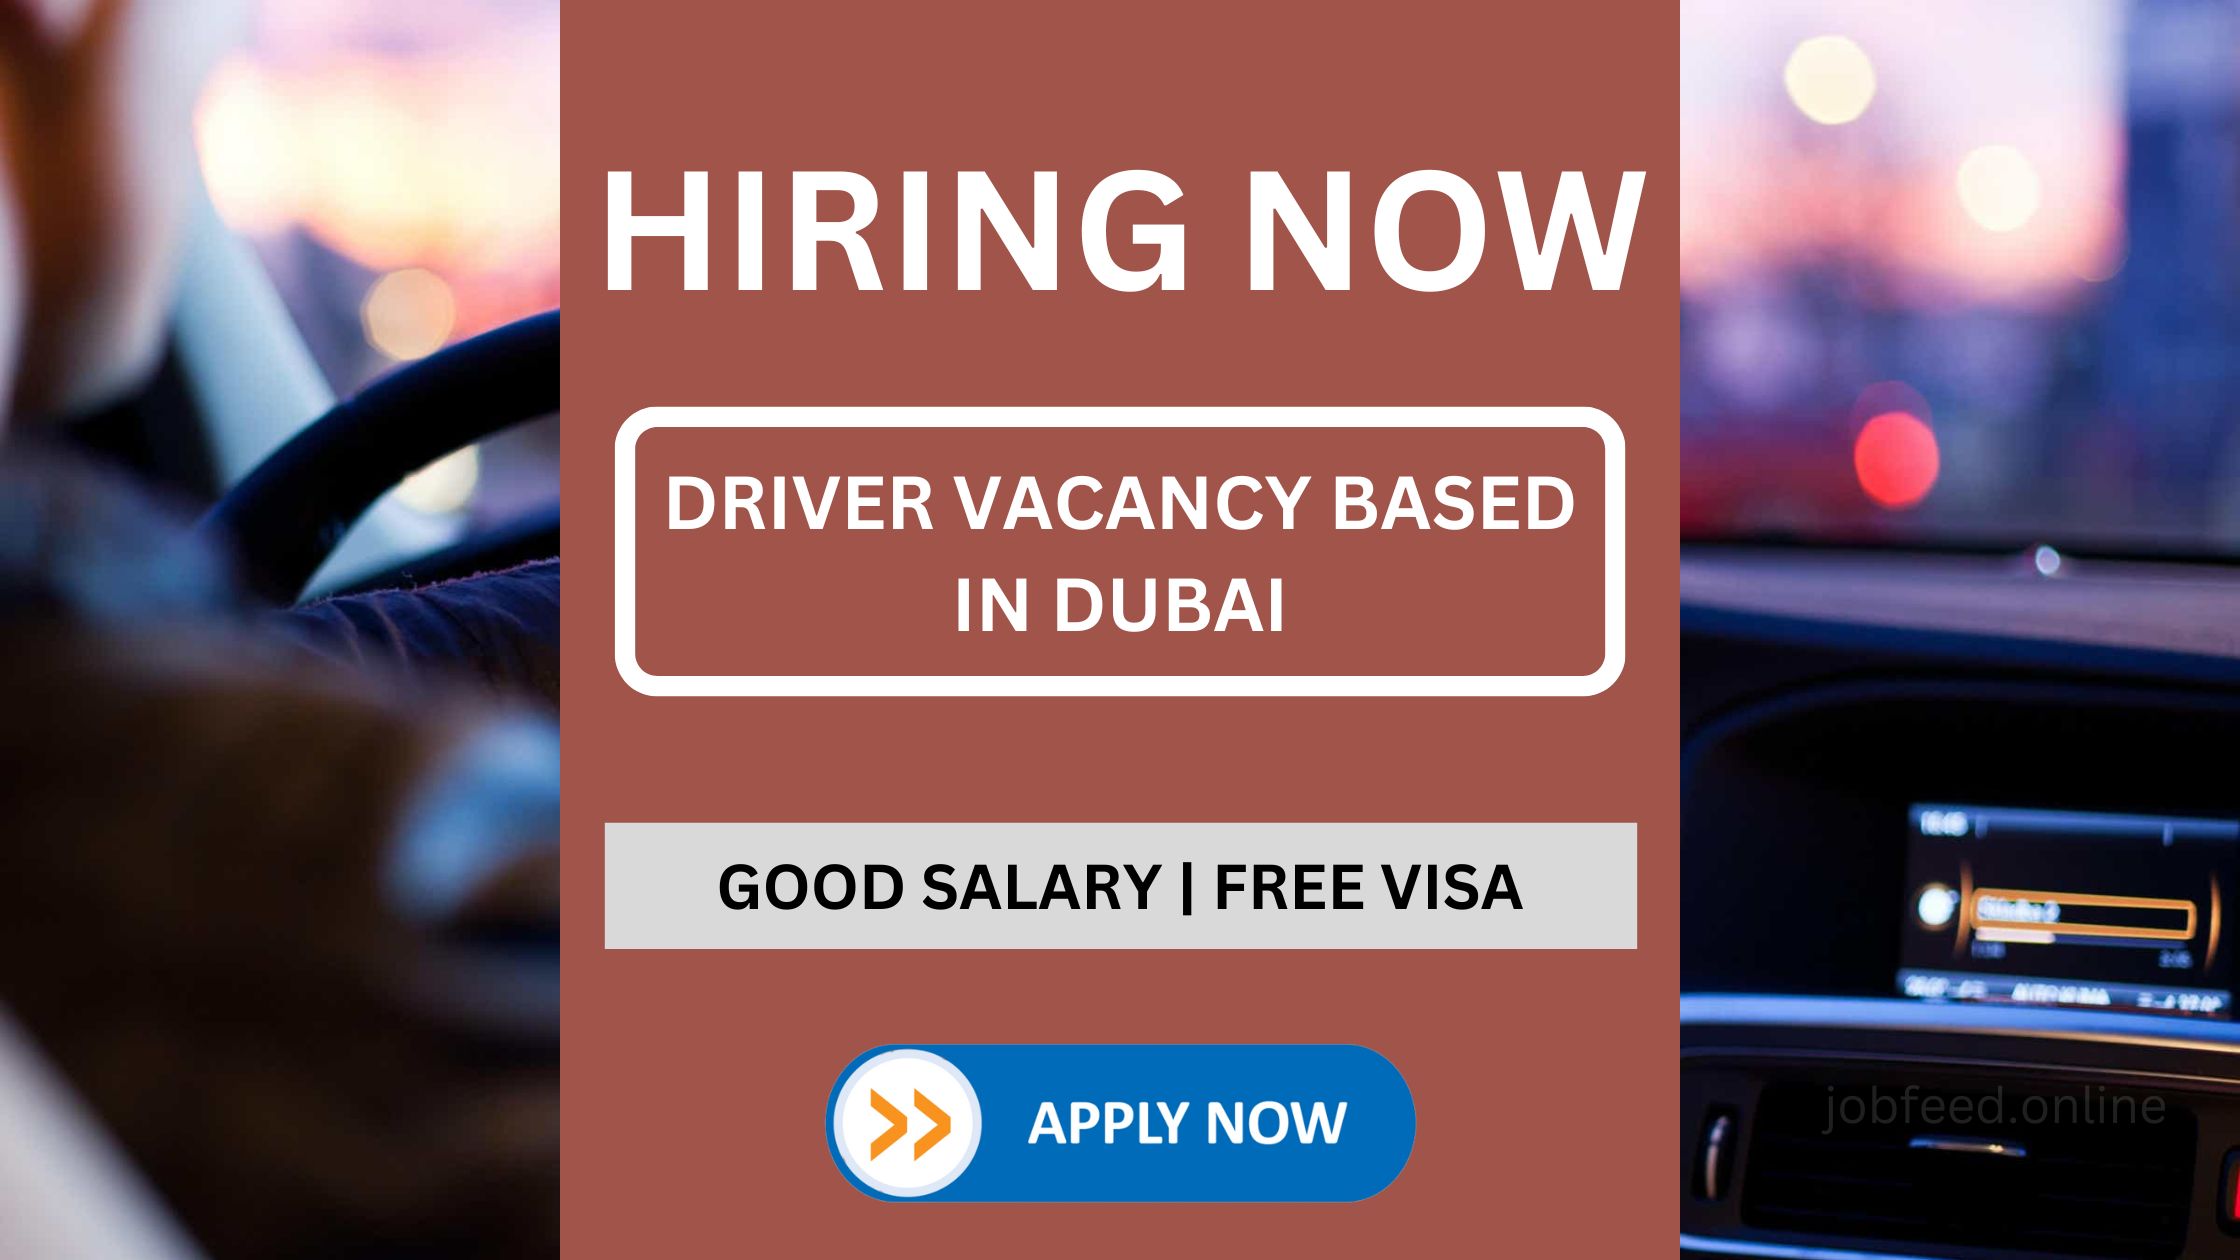 Driver Vacancy Based in Dubai, Driver